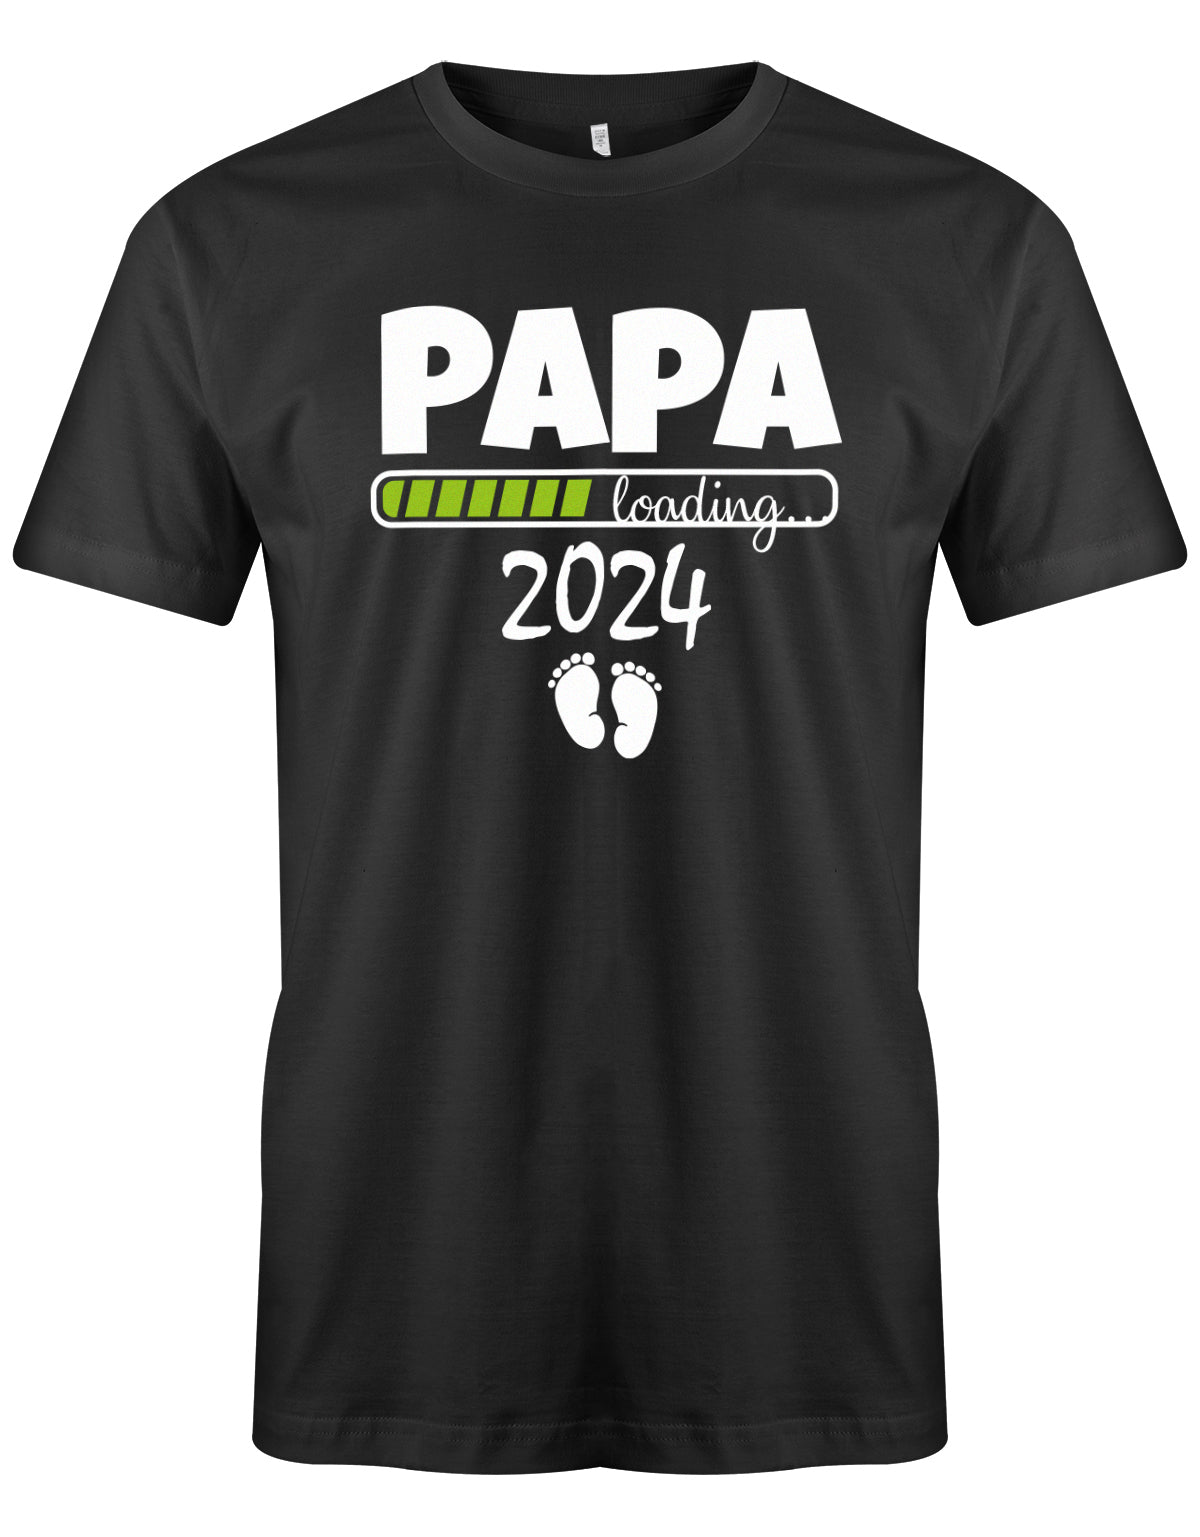 Papa Loading 2024 - Werdender Papa Shirt Herren Schwarz